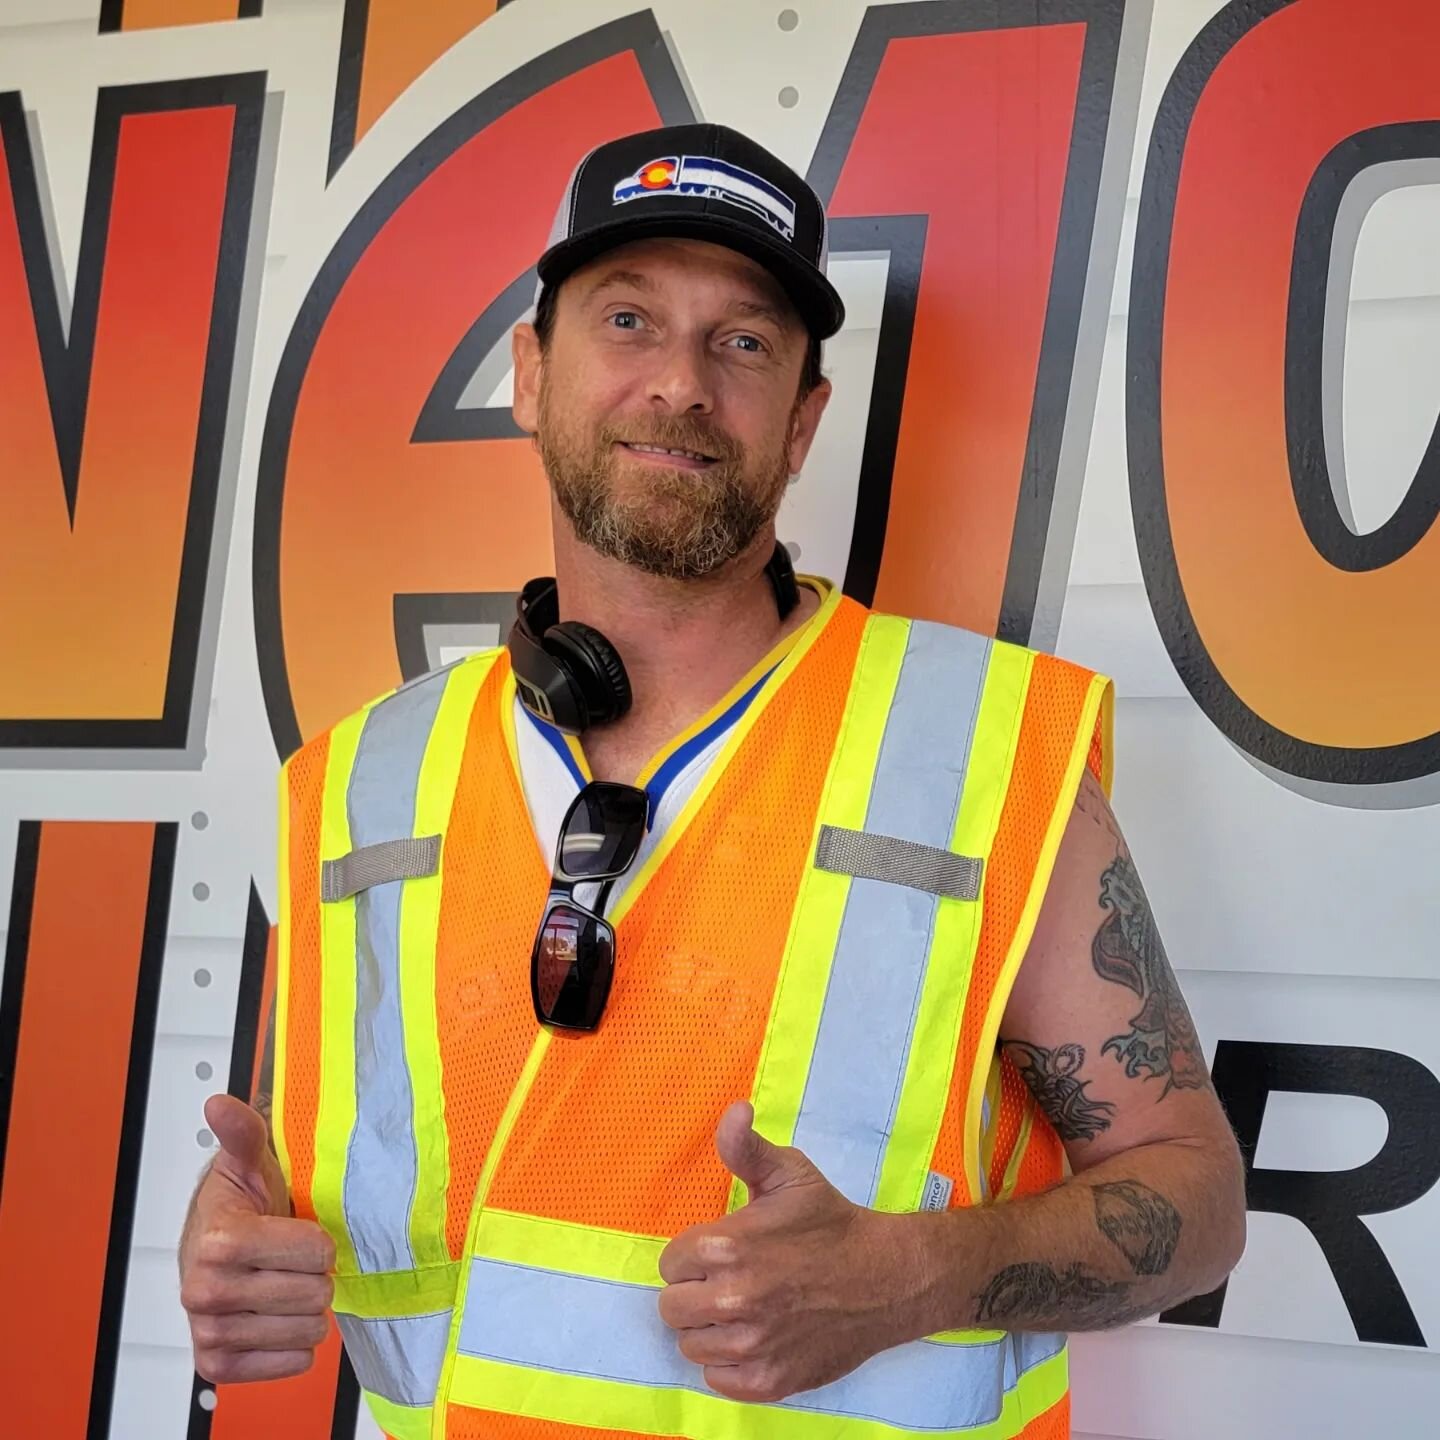 From Student to Professional Driver 👏🏻
Congratulations David. Be safe out there! 

#NavajoExpressInc #Denver #Colorado #trucking #trucks #truck #trucker #truckdriver #truckinglife #trucklife #trucksofinstagram #truckers #peterbilt #freight #trucker